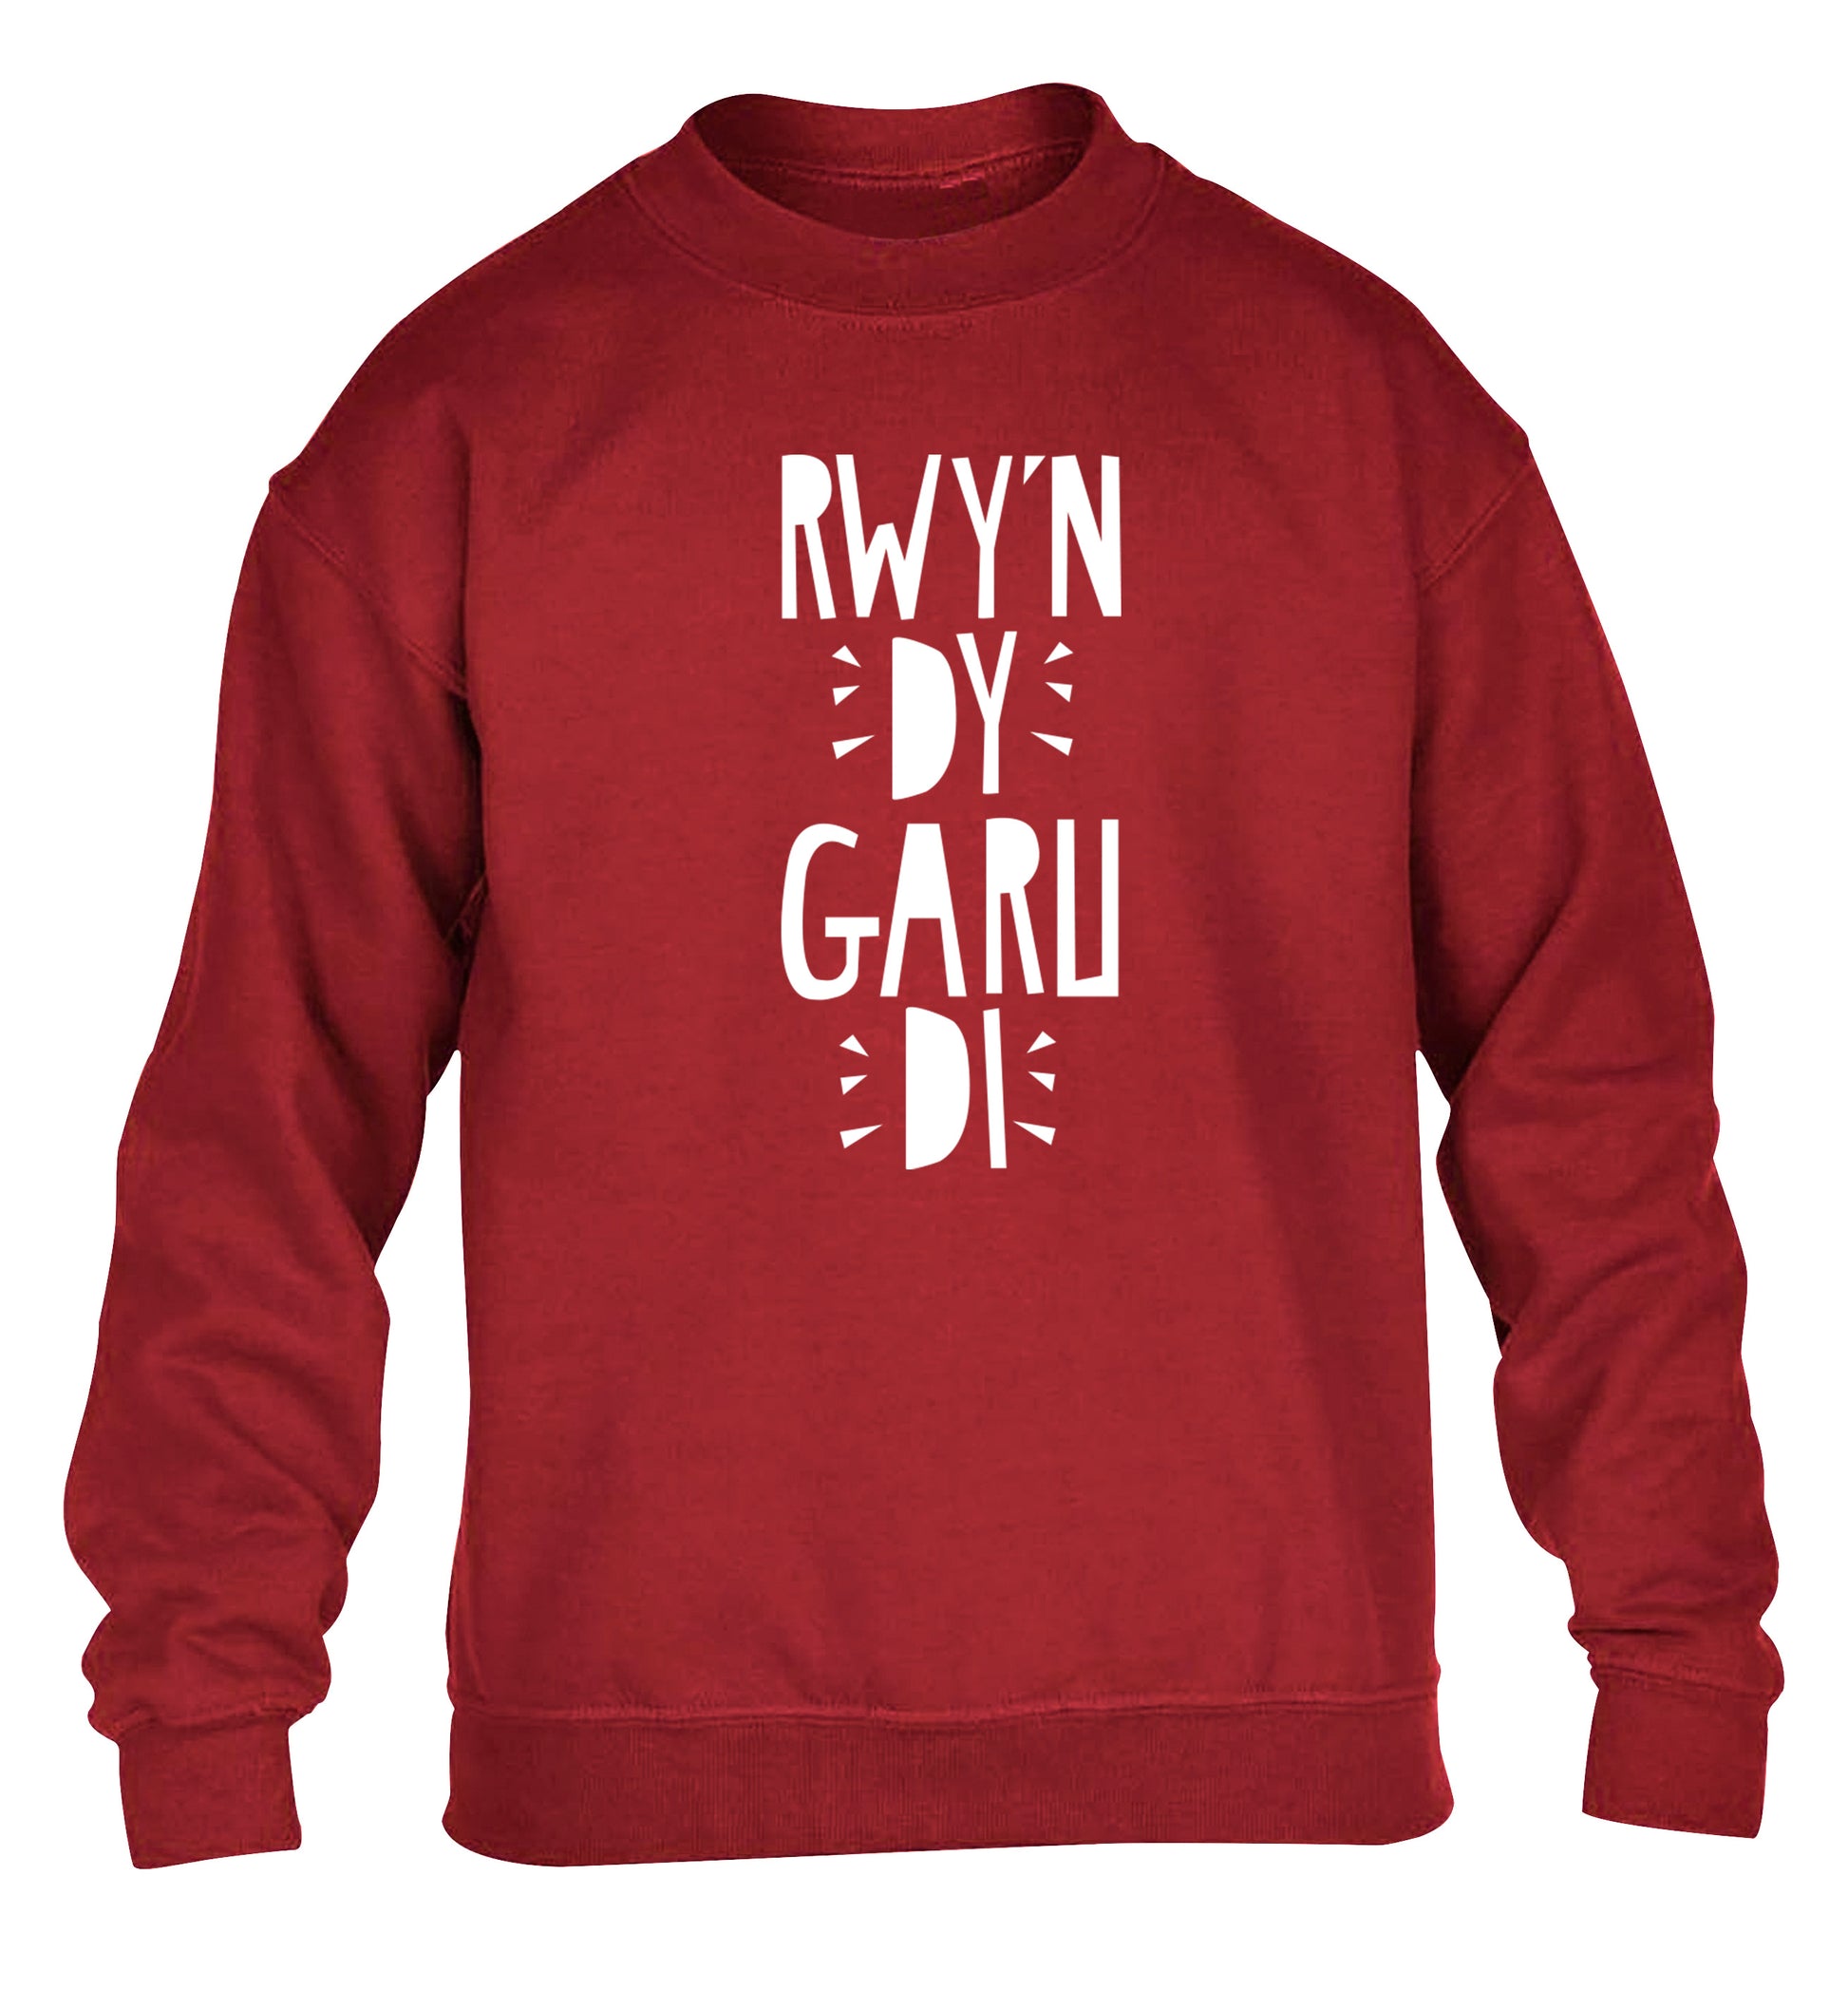 Rwy'n dy garu di - I love you children's grey sweater 12-13 Years